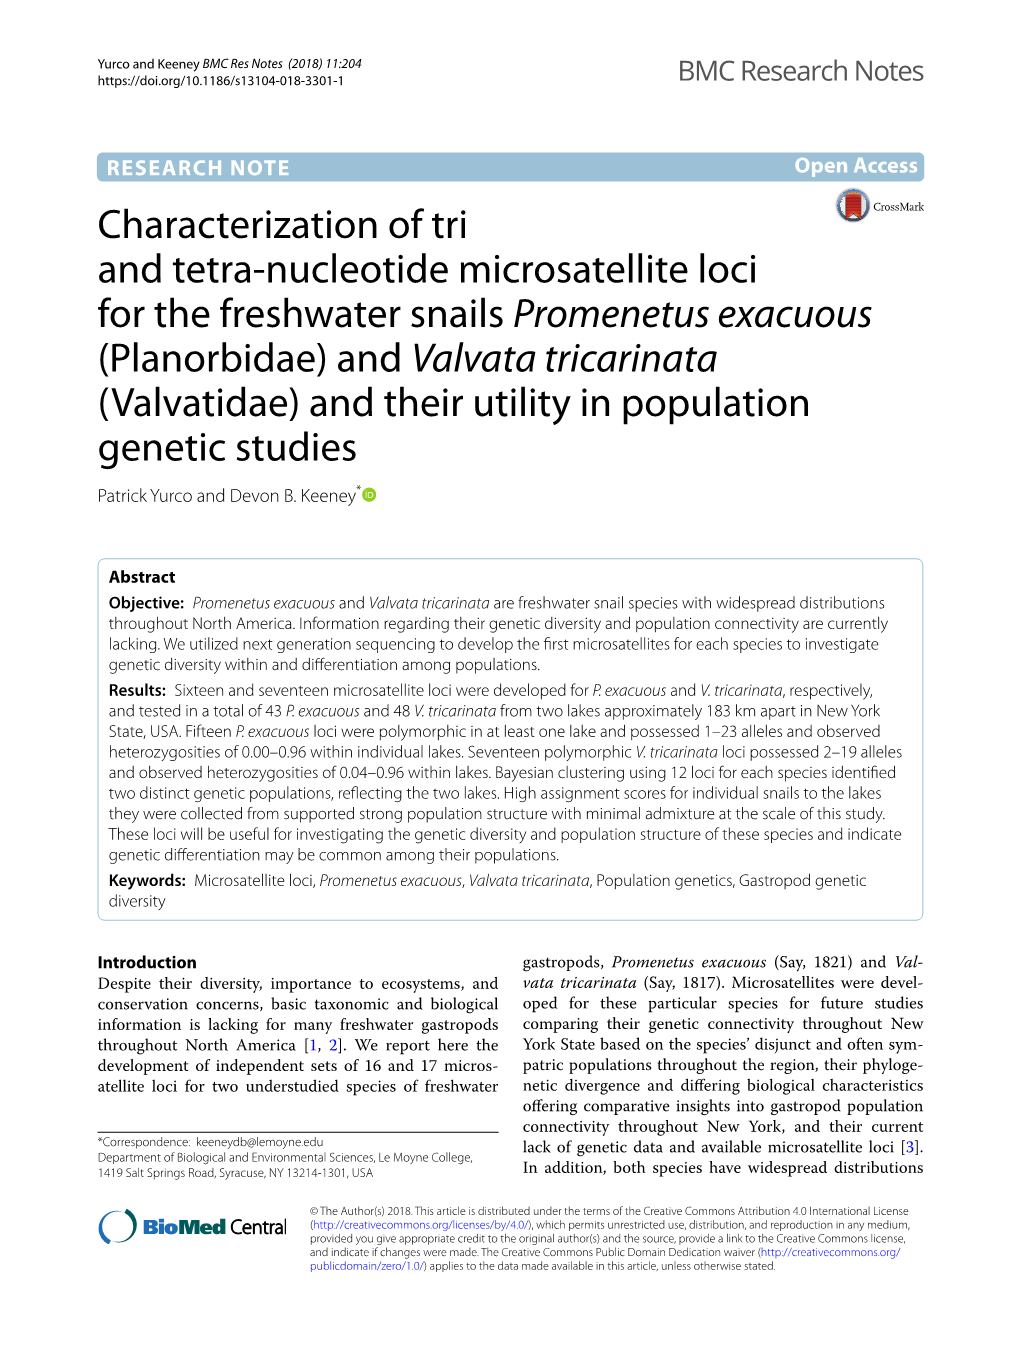 Characterization of Tri and Tetra-Nucleotide Microsatellite Loci